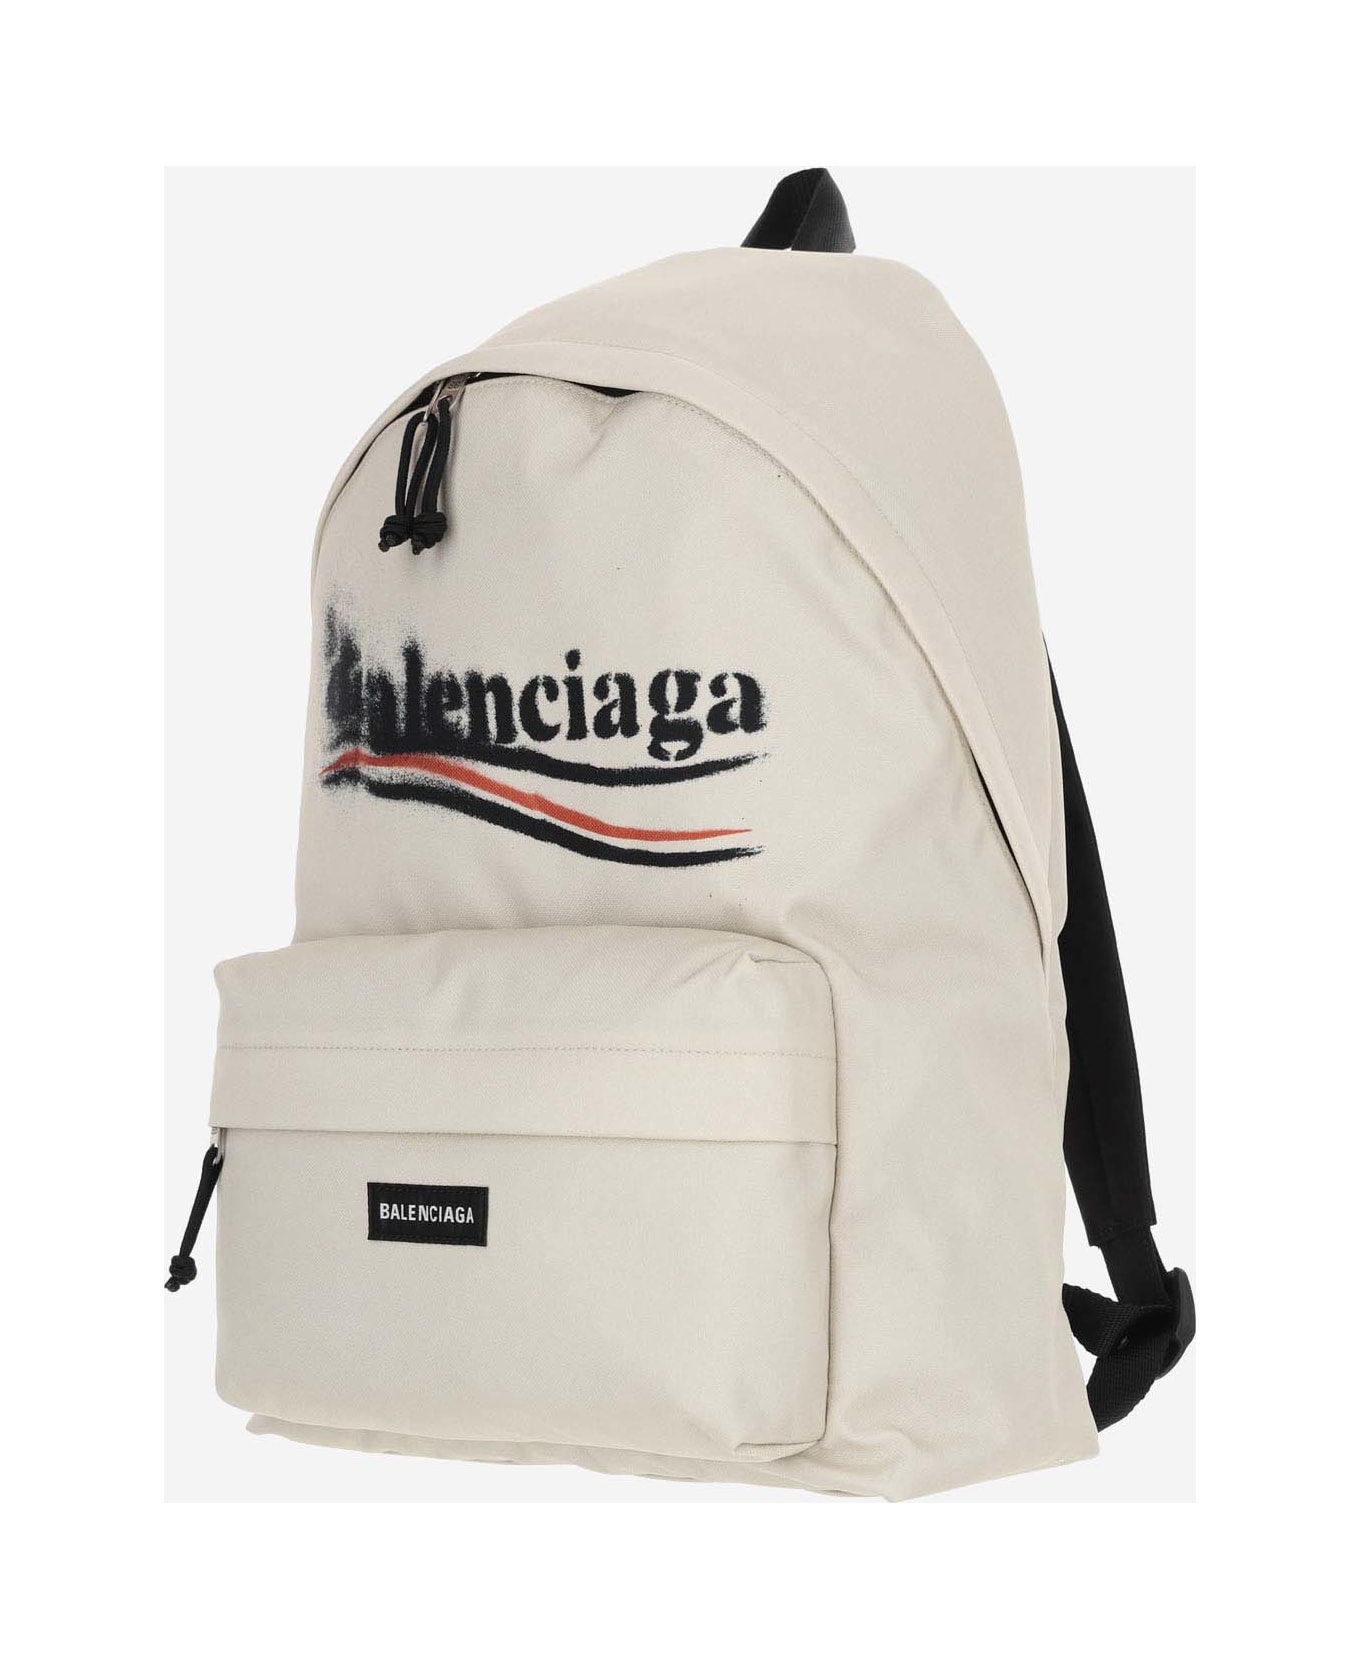 Balenciaga Explorer Backpack - Beige